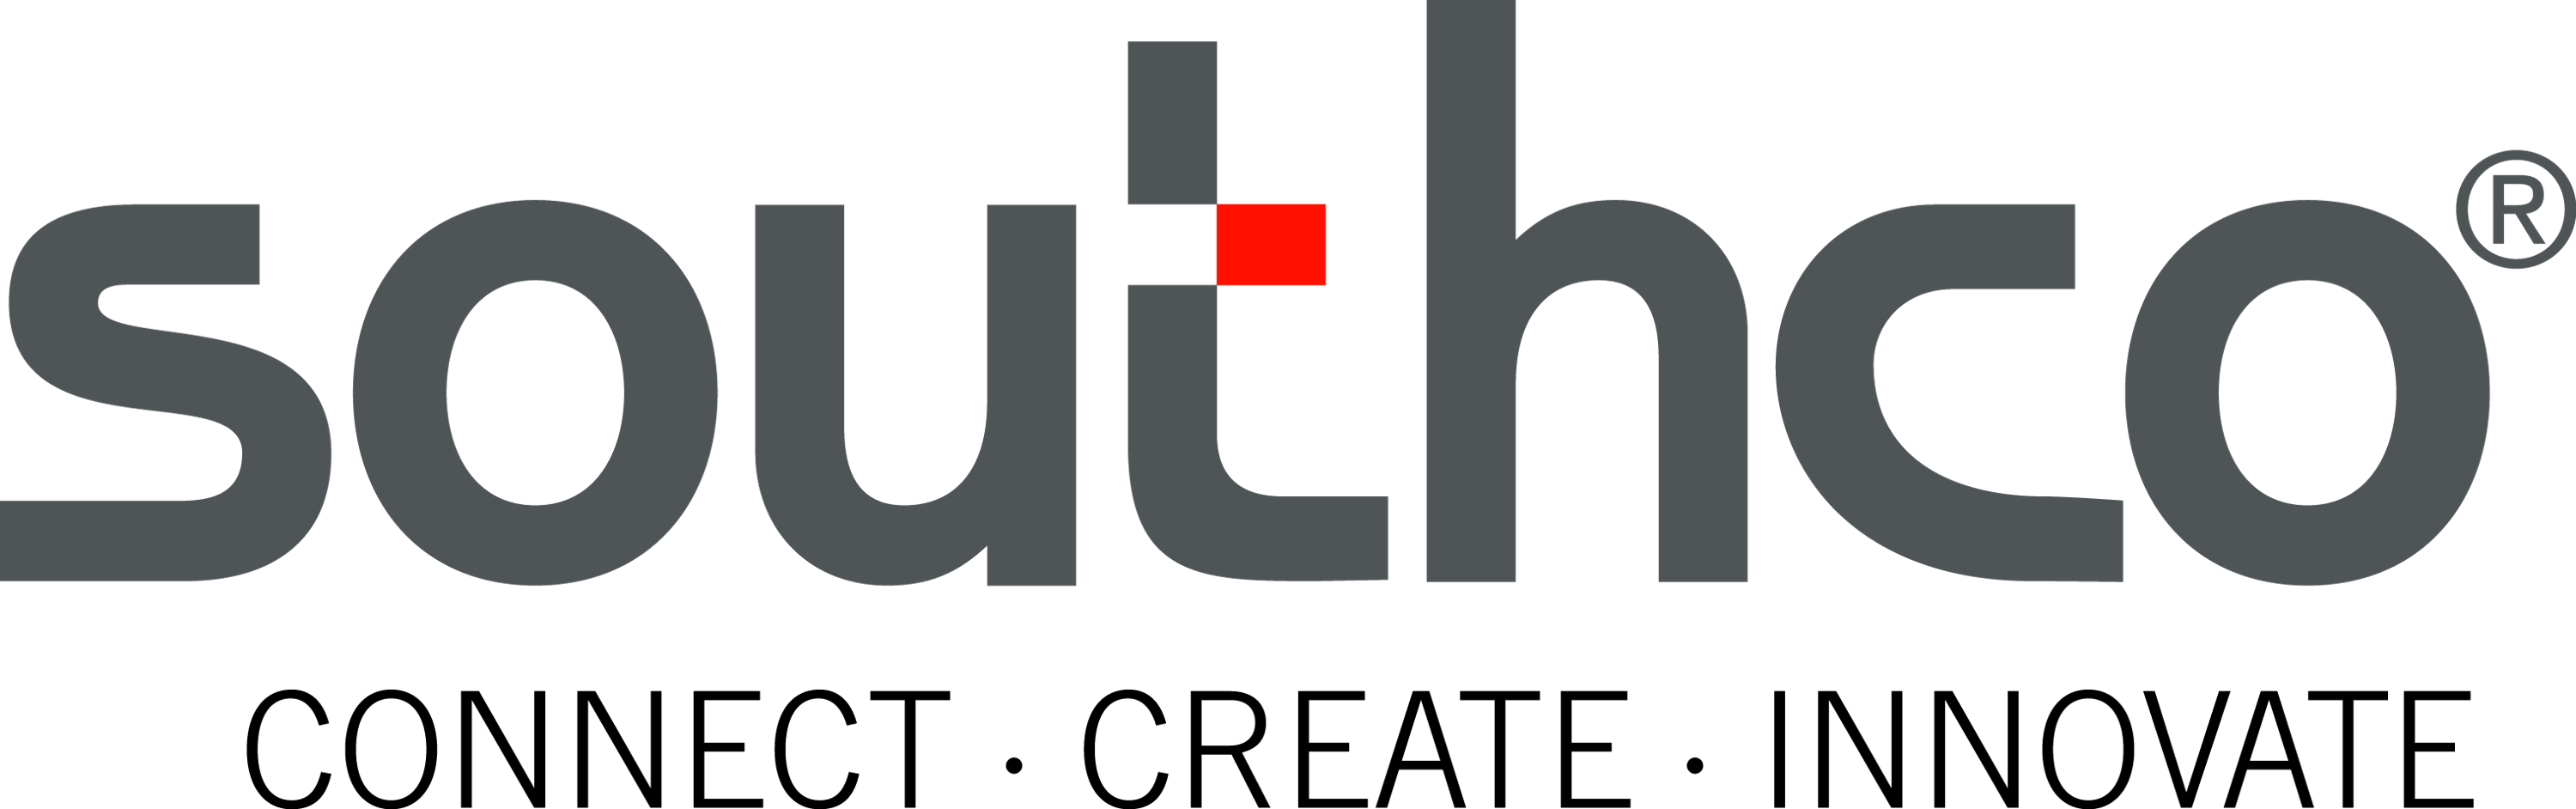  Southco - Logo